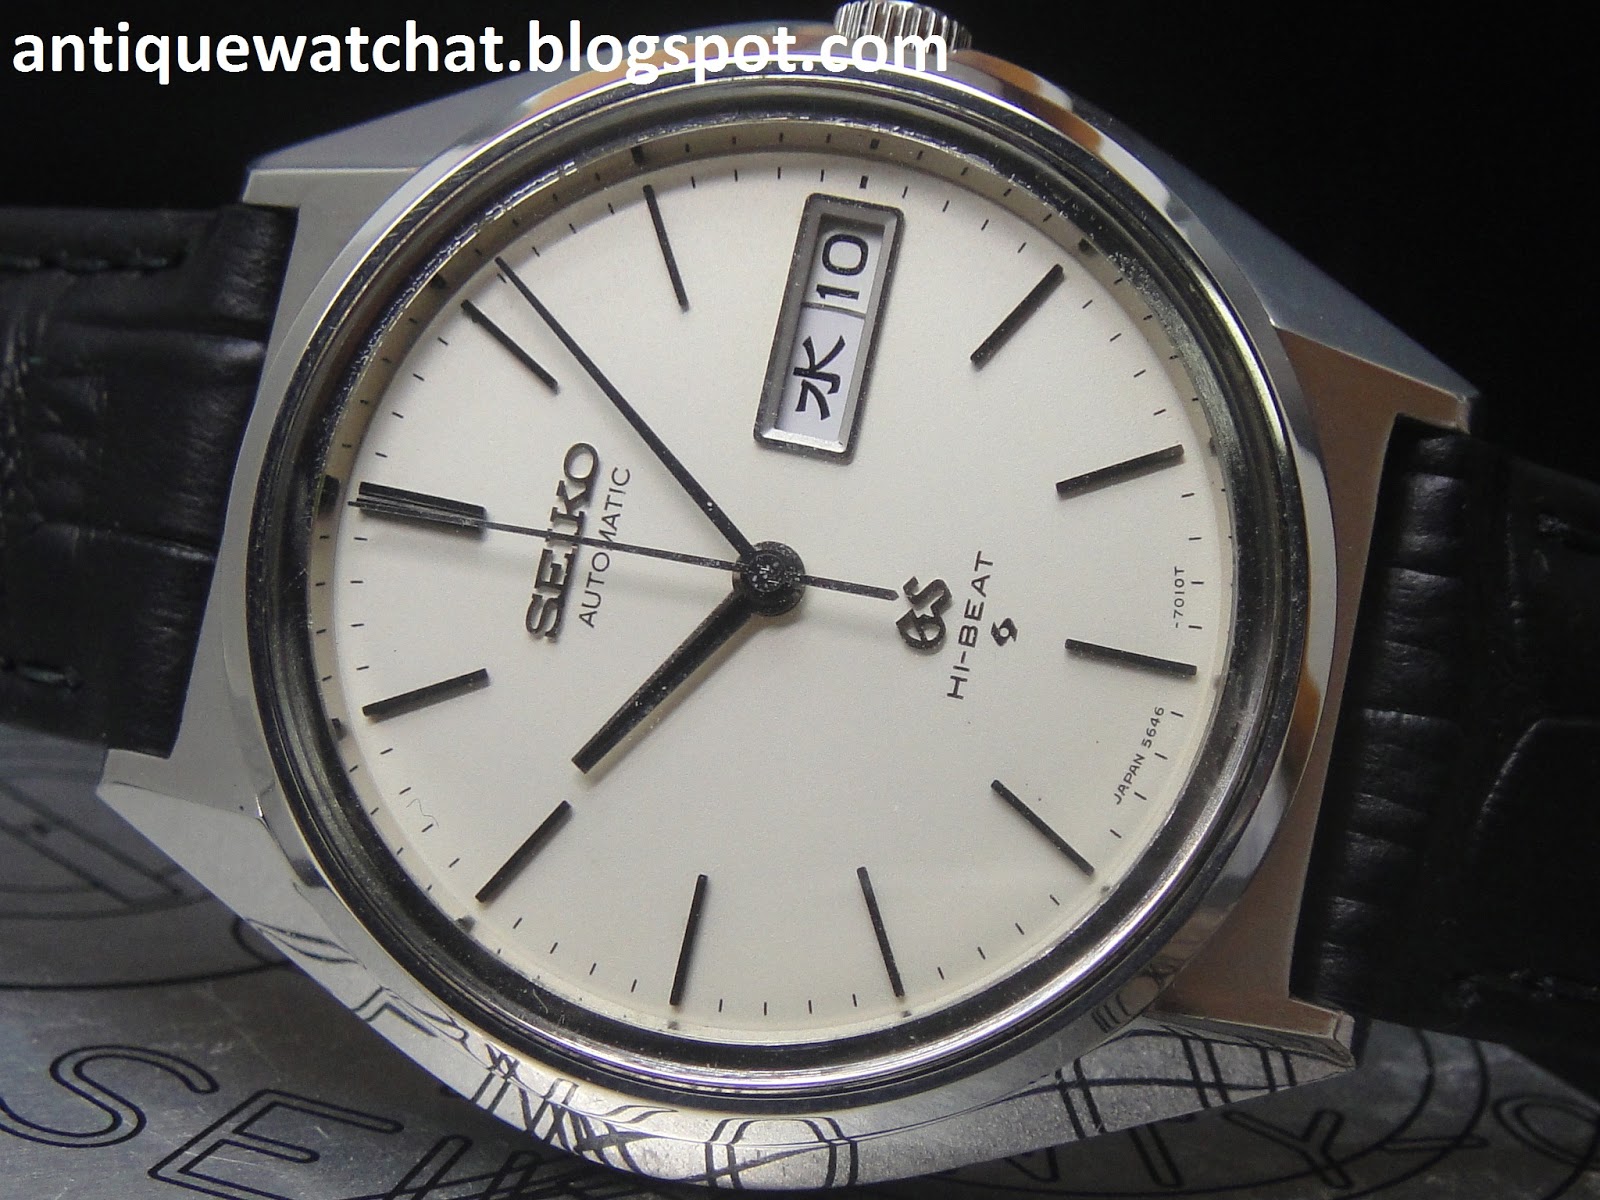 Antique Watch Bar: GRAND SEIKO HI-BEAT 5646-7010 GS10 (SOLD)